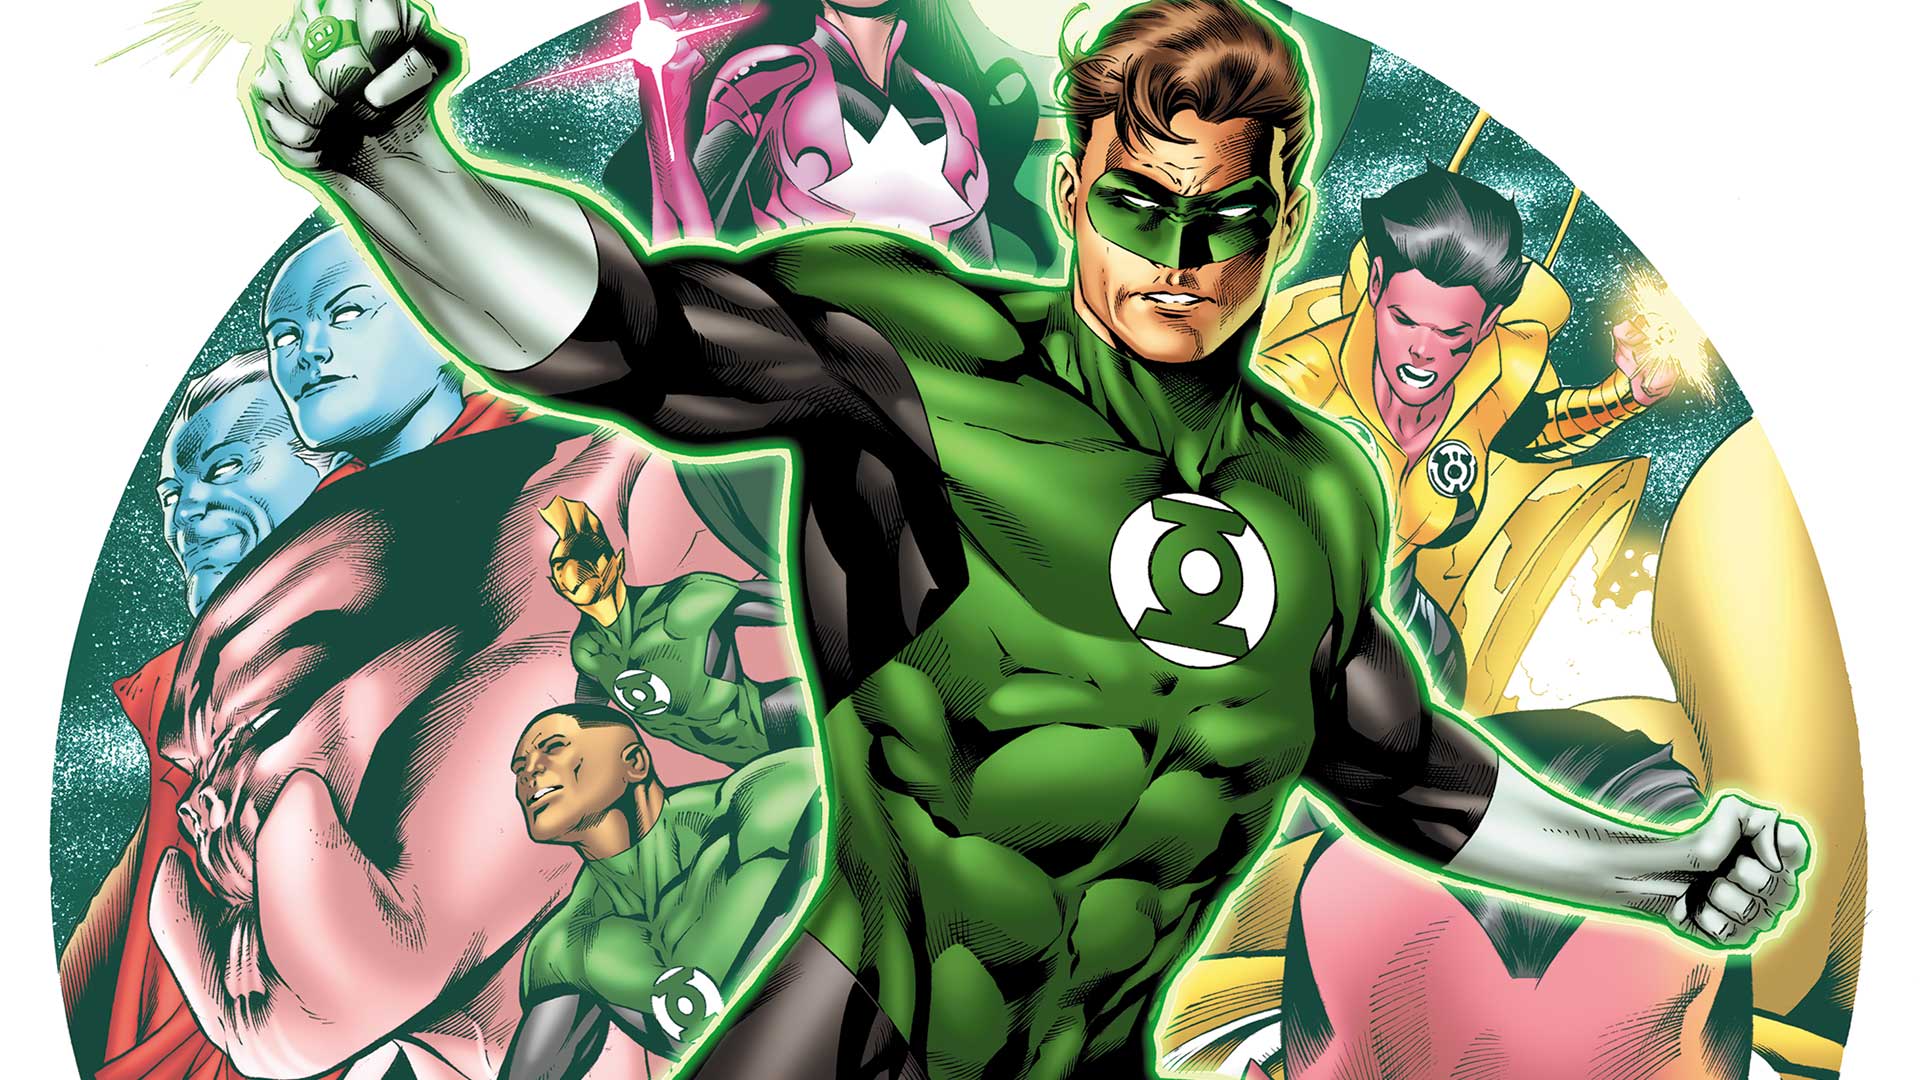 Green Lantern Characters Hal Jordan Injustice 2 Maintenance Green Lantern Ring Mastery Skins Wallpaper HD For Mobile Phones And Laptops 1920x1080, Wallpaper13.com